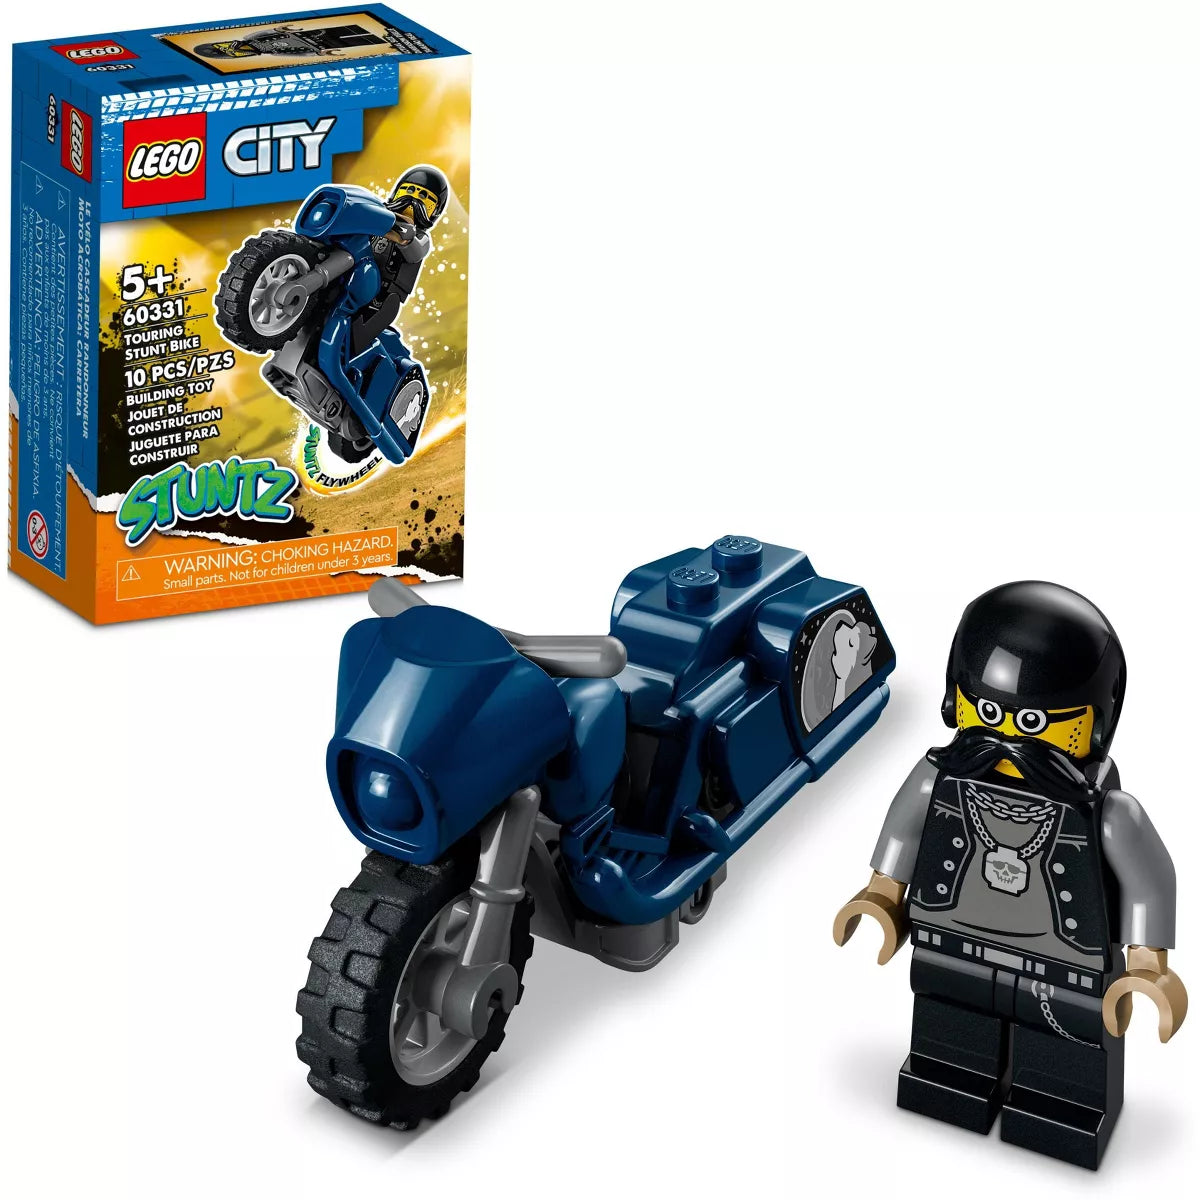 LEGO City Touring Stunt Bike 60331 Building Set